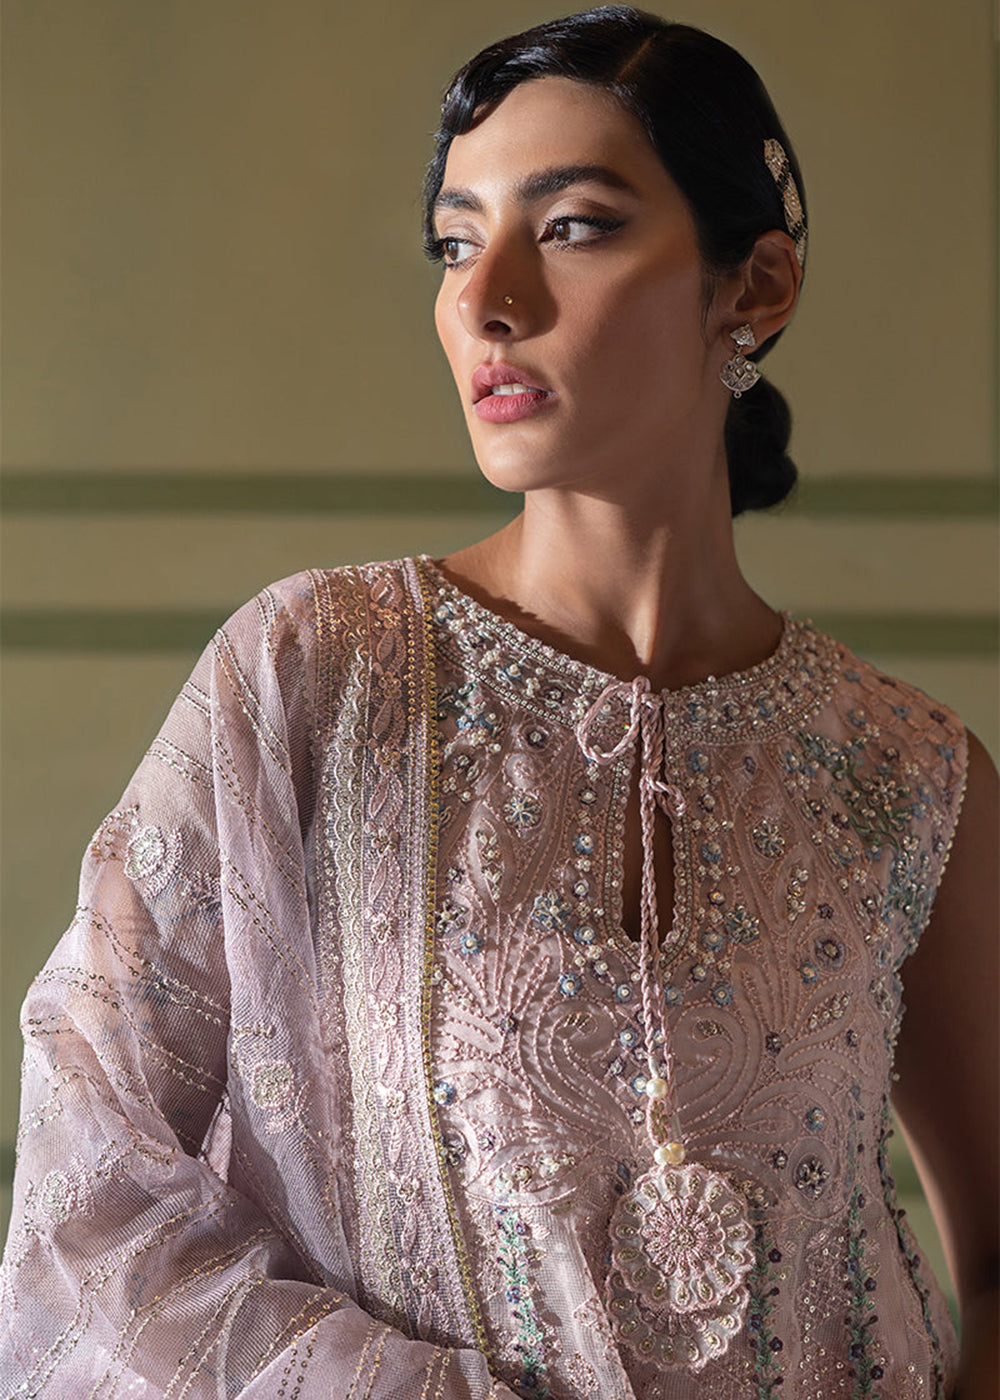 Buy Now Pink Organza Net Pakistani Suit | Mushq | Qala Kamdaani | Zoya Online in USA, UK, Canada & Worldwide at Empress Clothing.